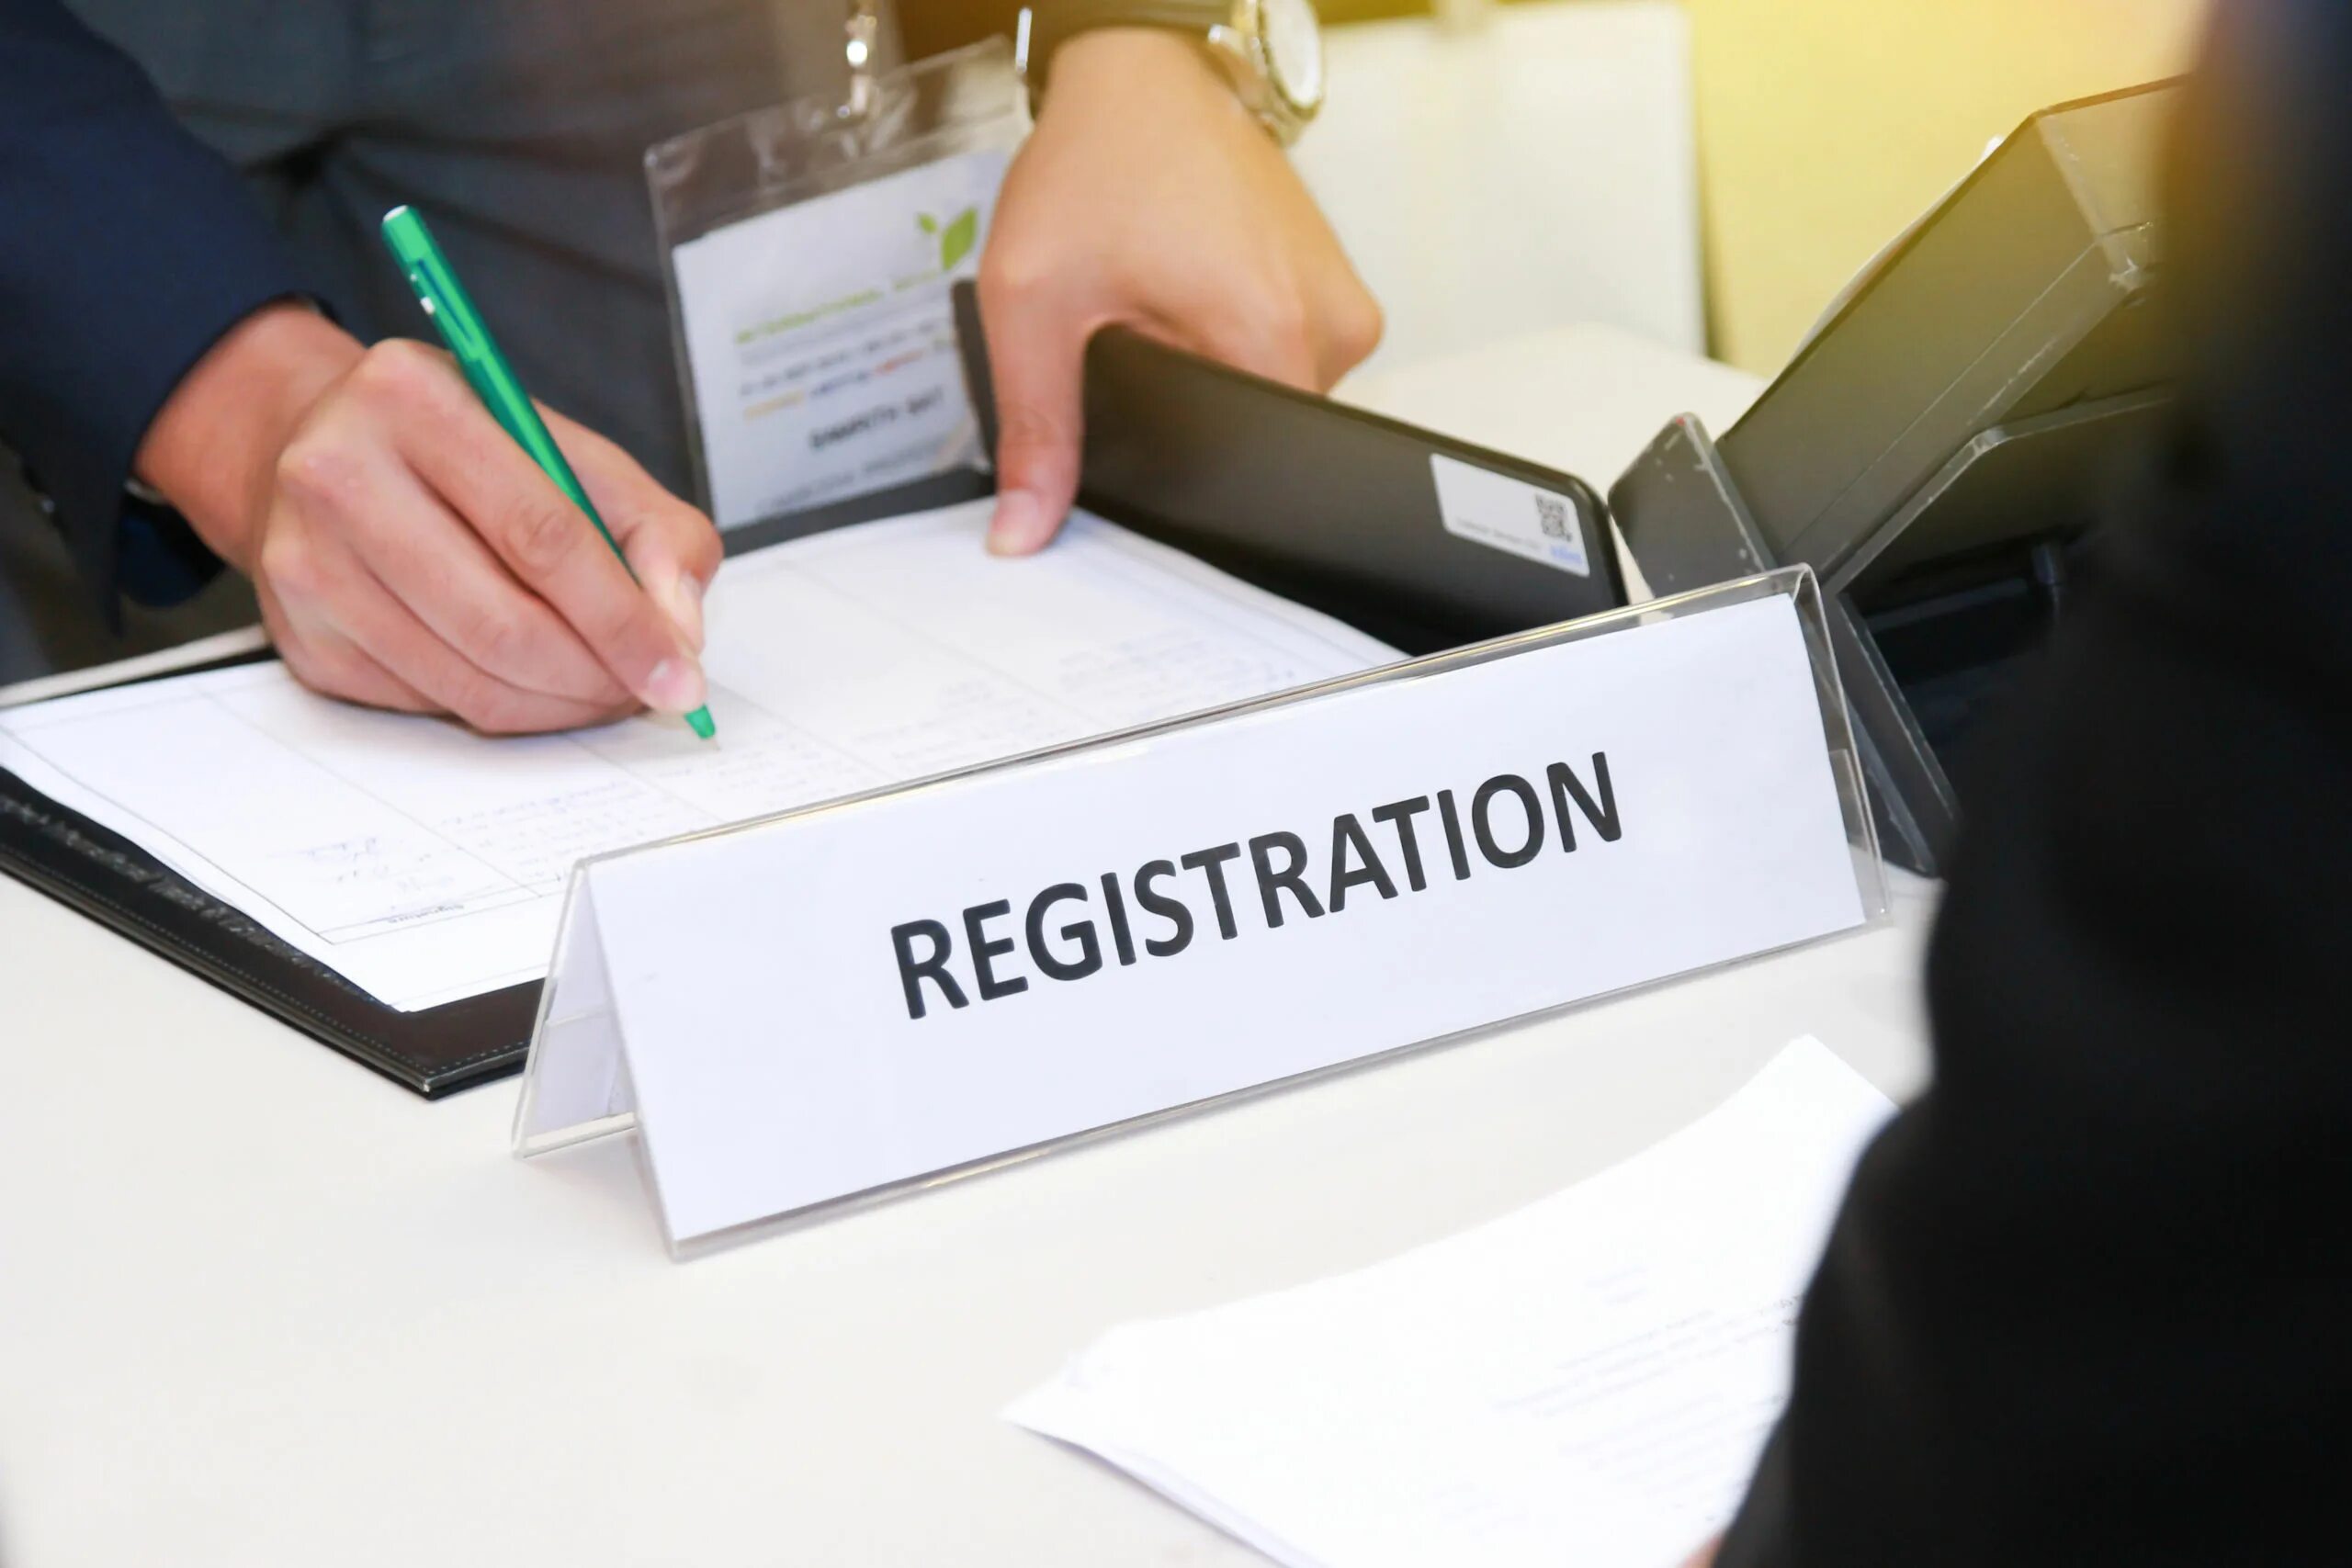 Client registration. Registration. Регистрация картинка. Регистрация иллюстрация. Registration картинки.